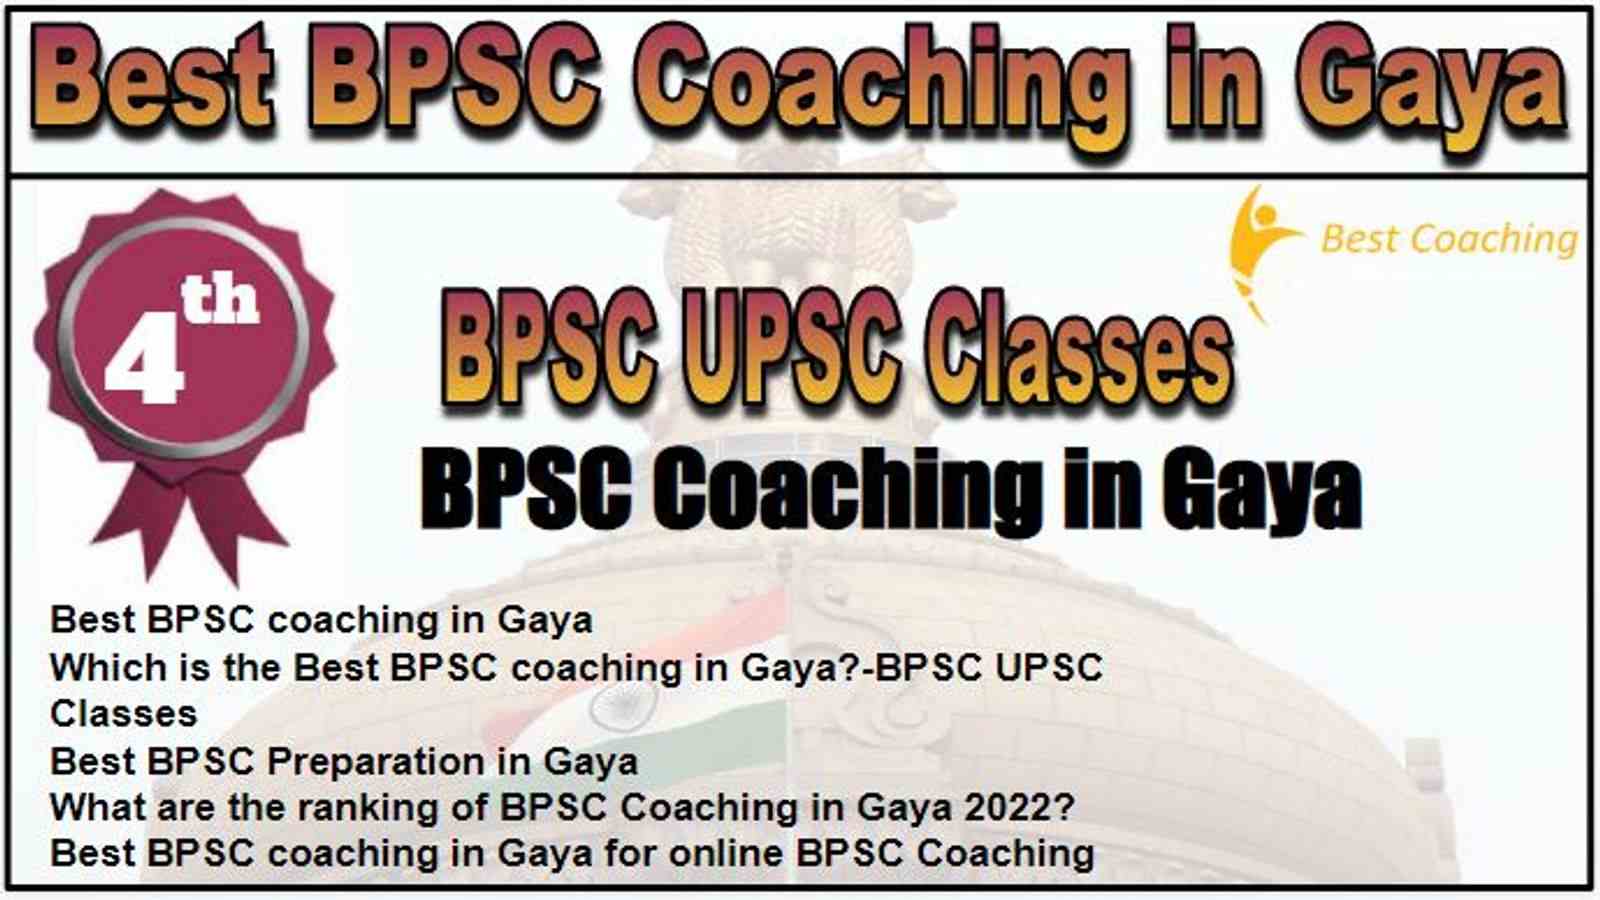 Rank 4 Best BPSC Coaching in Gaya